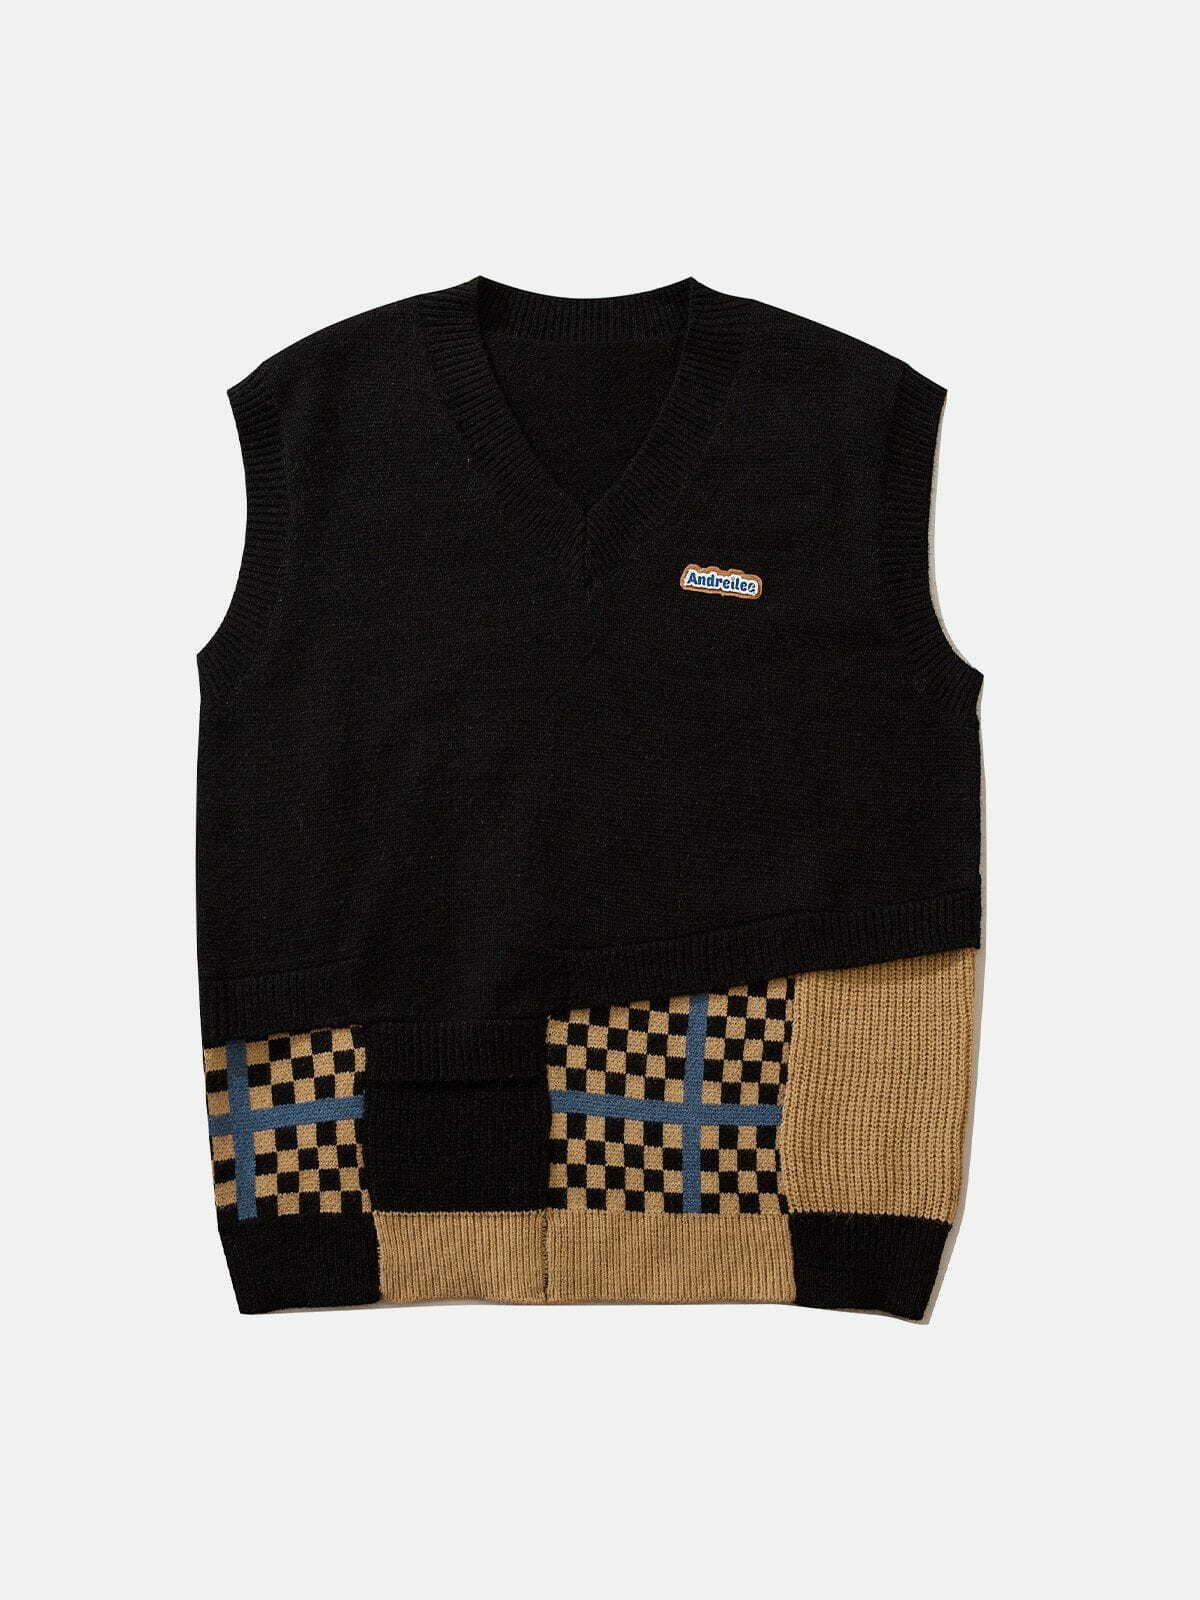 patchwork plaid sweater vest edgy & retro streetwear essential 4395